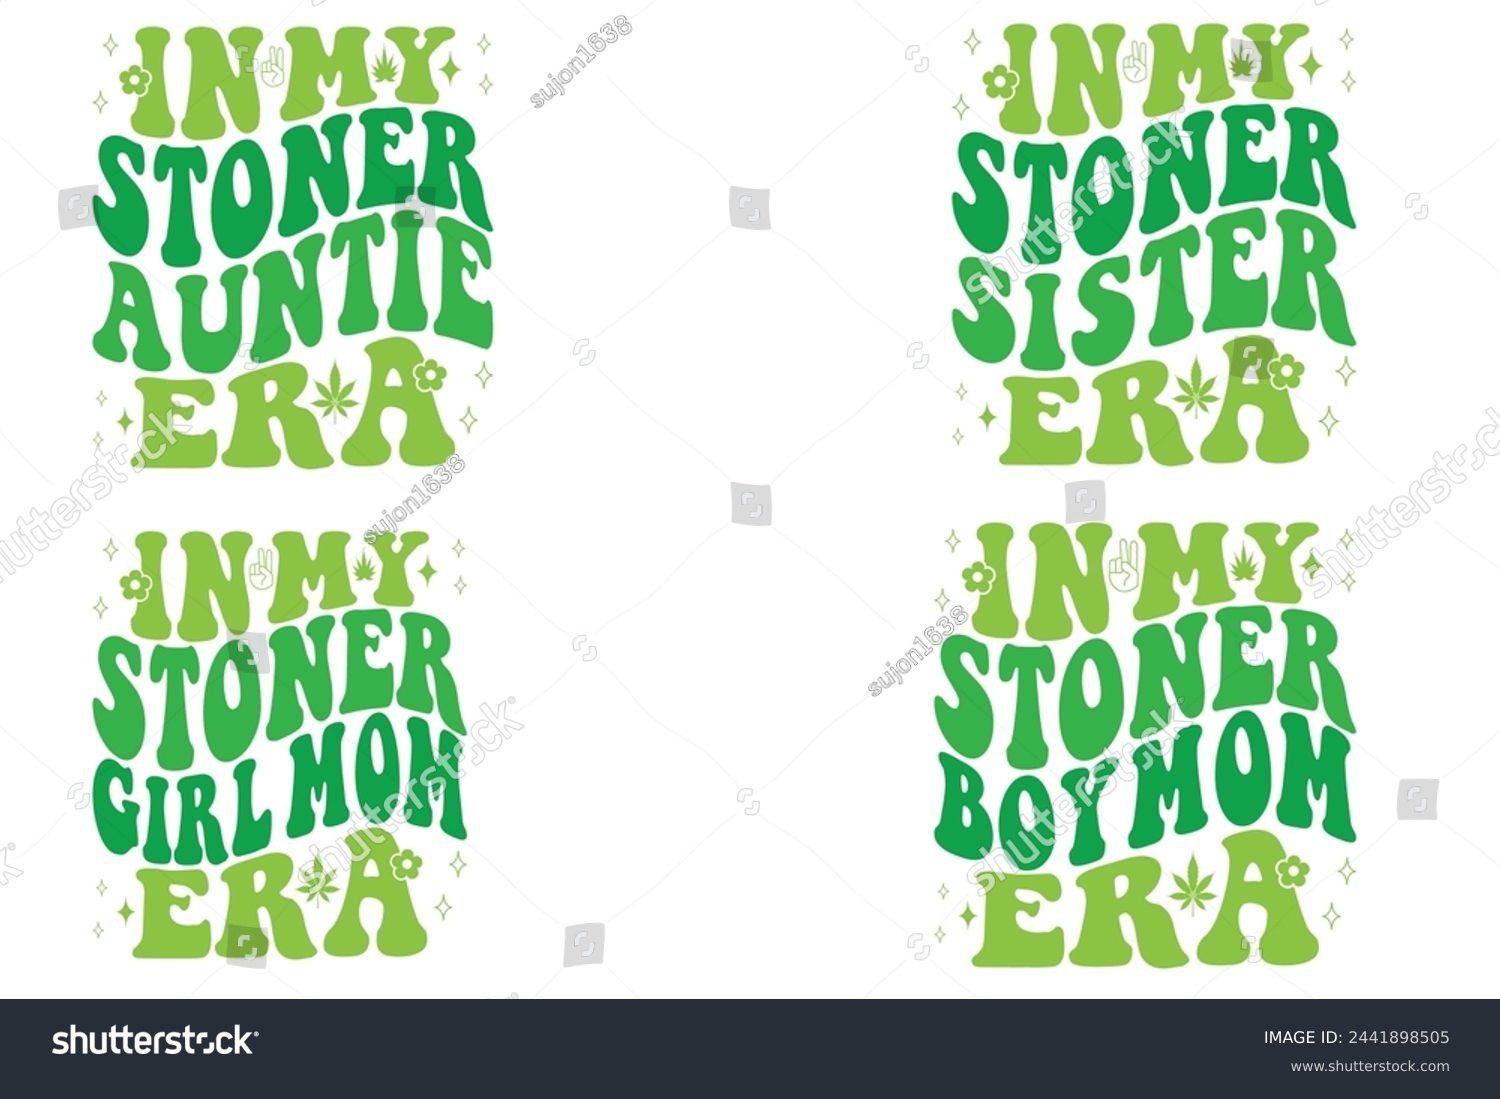 SVG of In My Stoner auntie Era, In My Stoner sister Era, In My Stoner girl mom Era, In My Stoner boy mom Era retro T-shirt svg